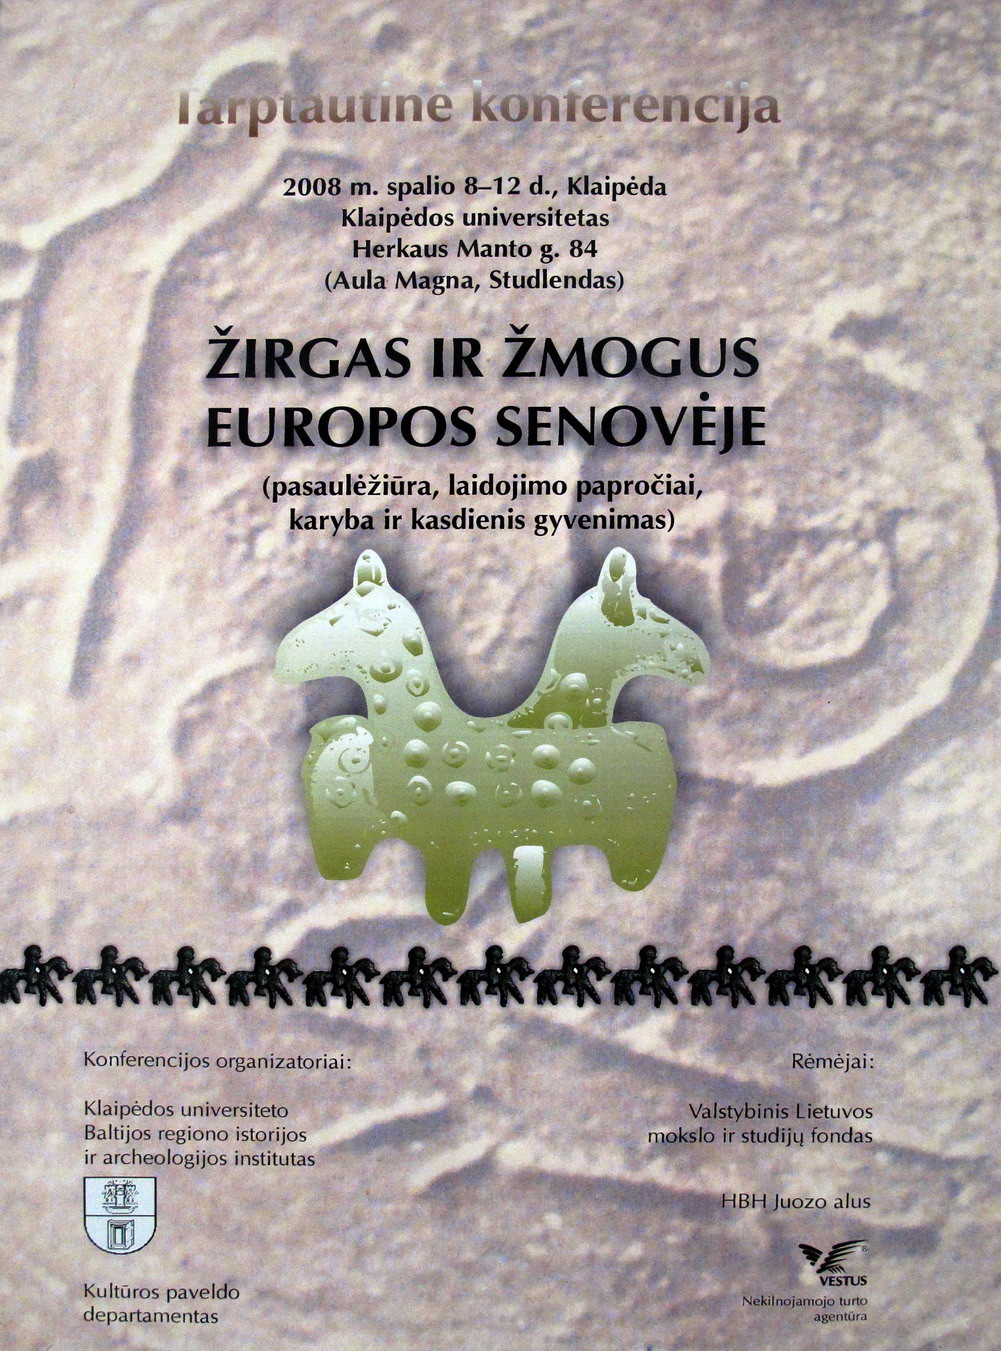 Konferencija-2008-Zirgas-ir-zmogus_resize.jpeg